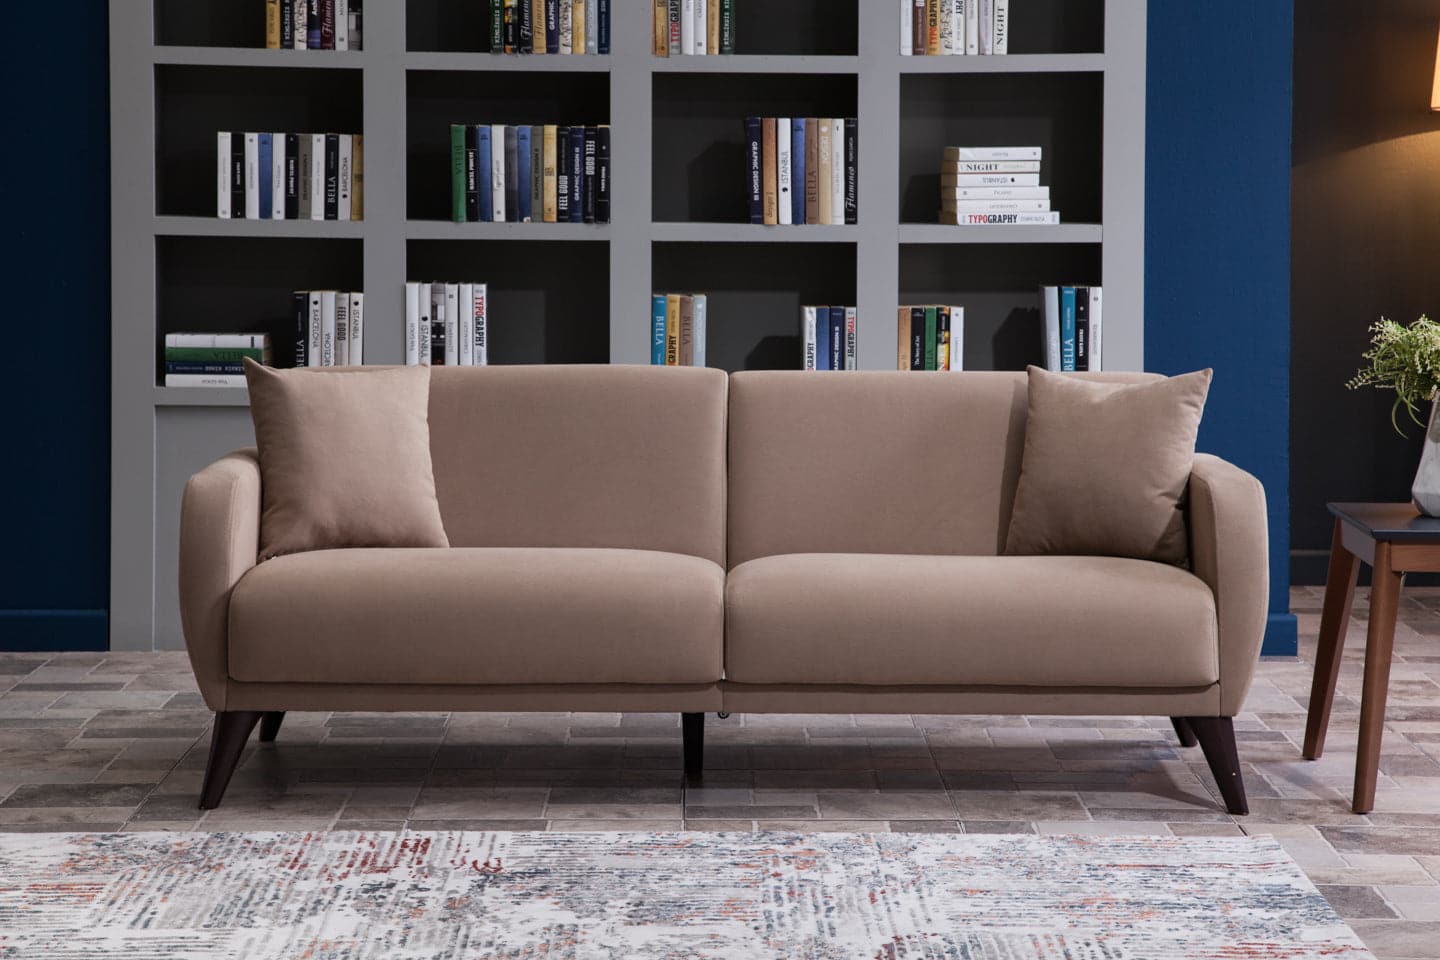 Flexy Sofa In A Box - Light Gray